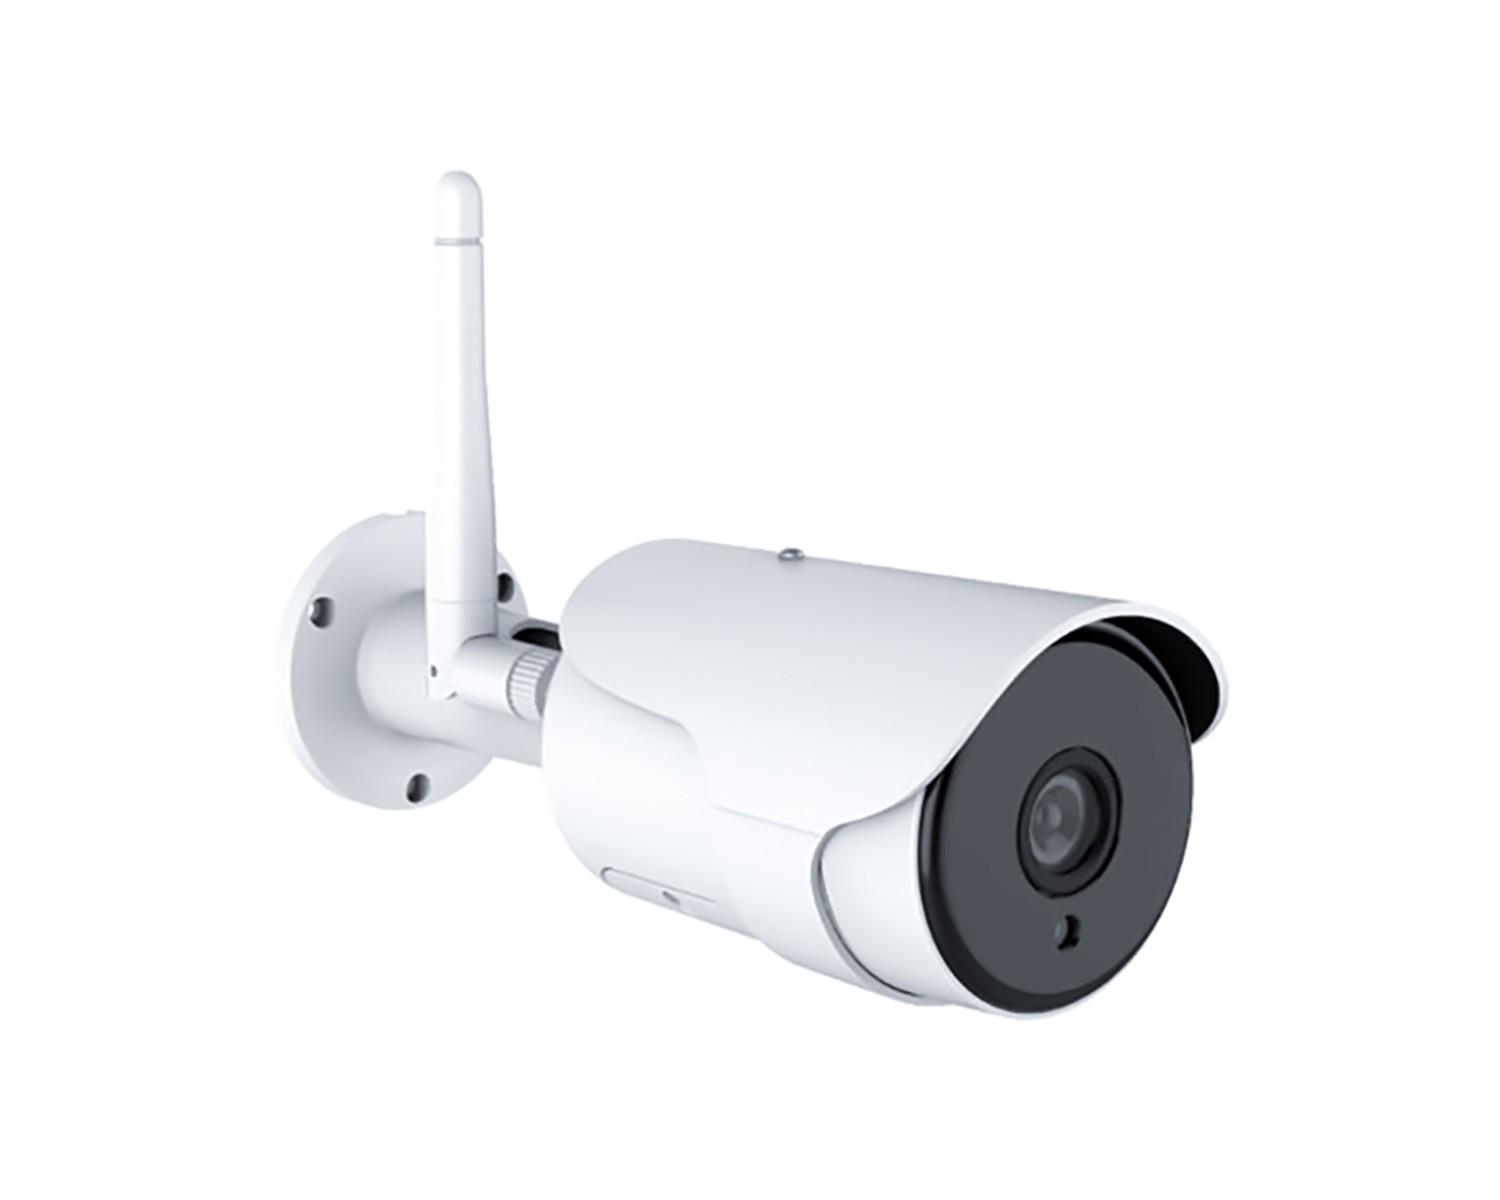 Уличная 5-мегапиксельная Wi-Fi IP видеокамера KDM 216-AW5-8G 160921527 уличная 5 мегапиксельная wi fi ip камера кадимей 248 aw5 8g 160921525